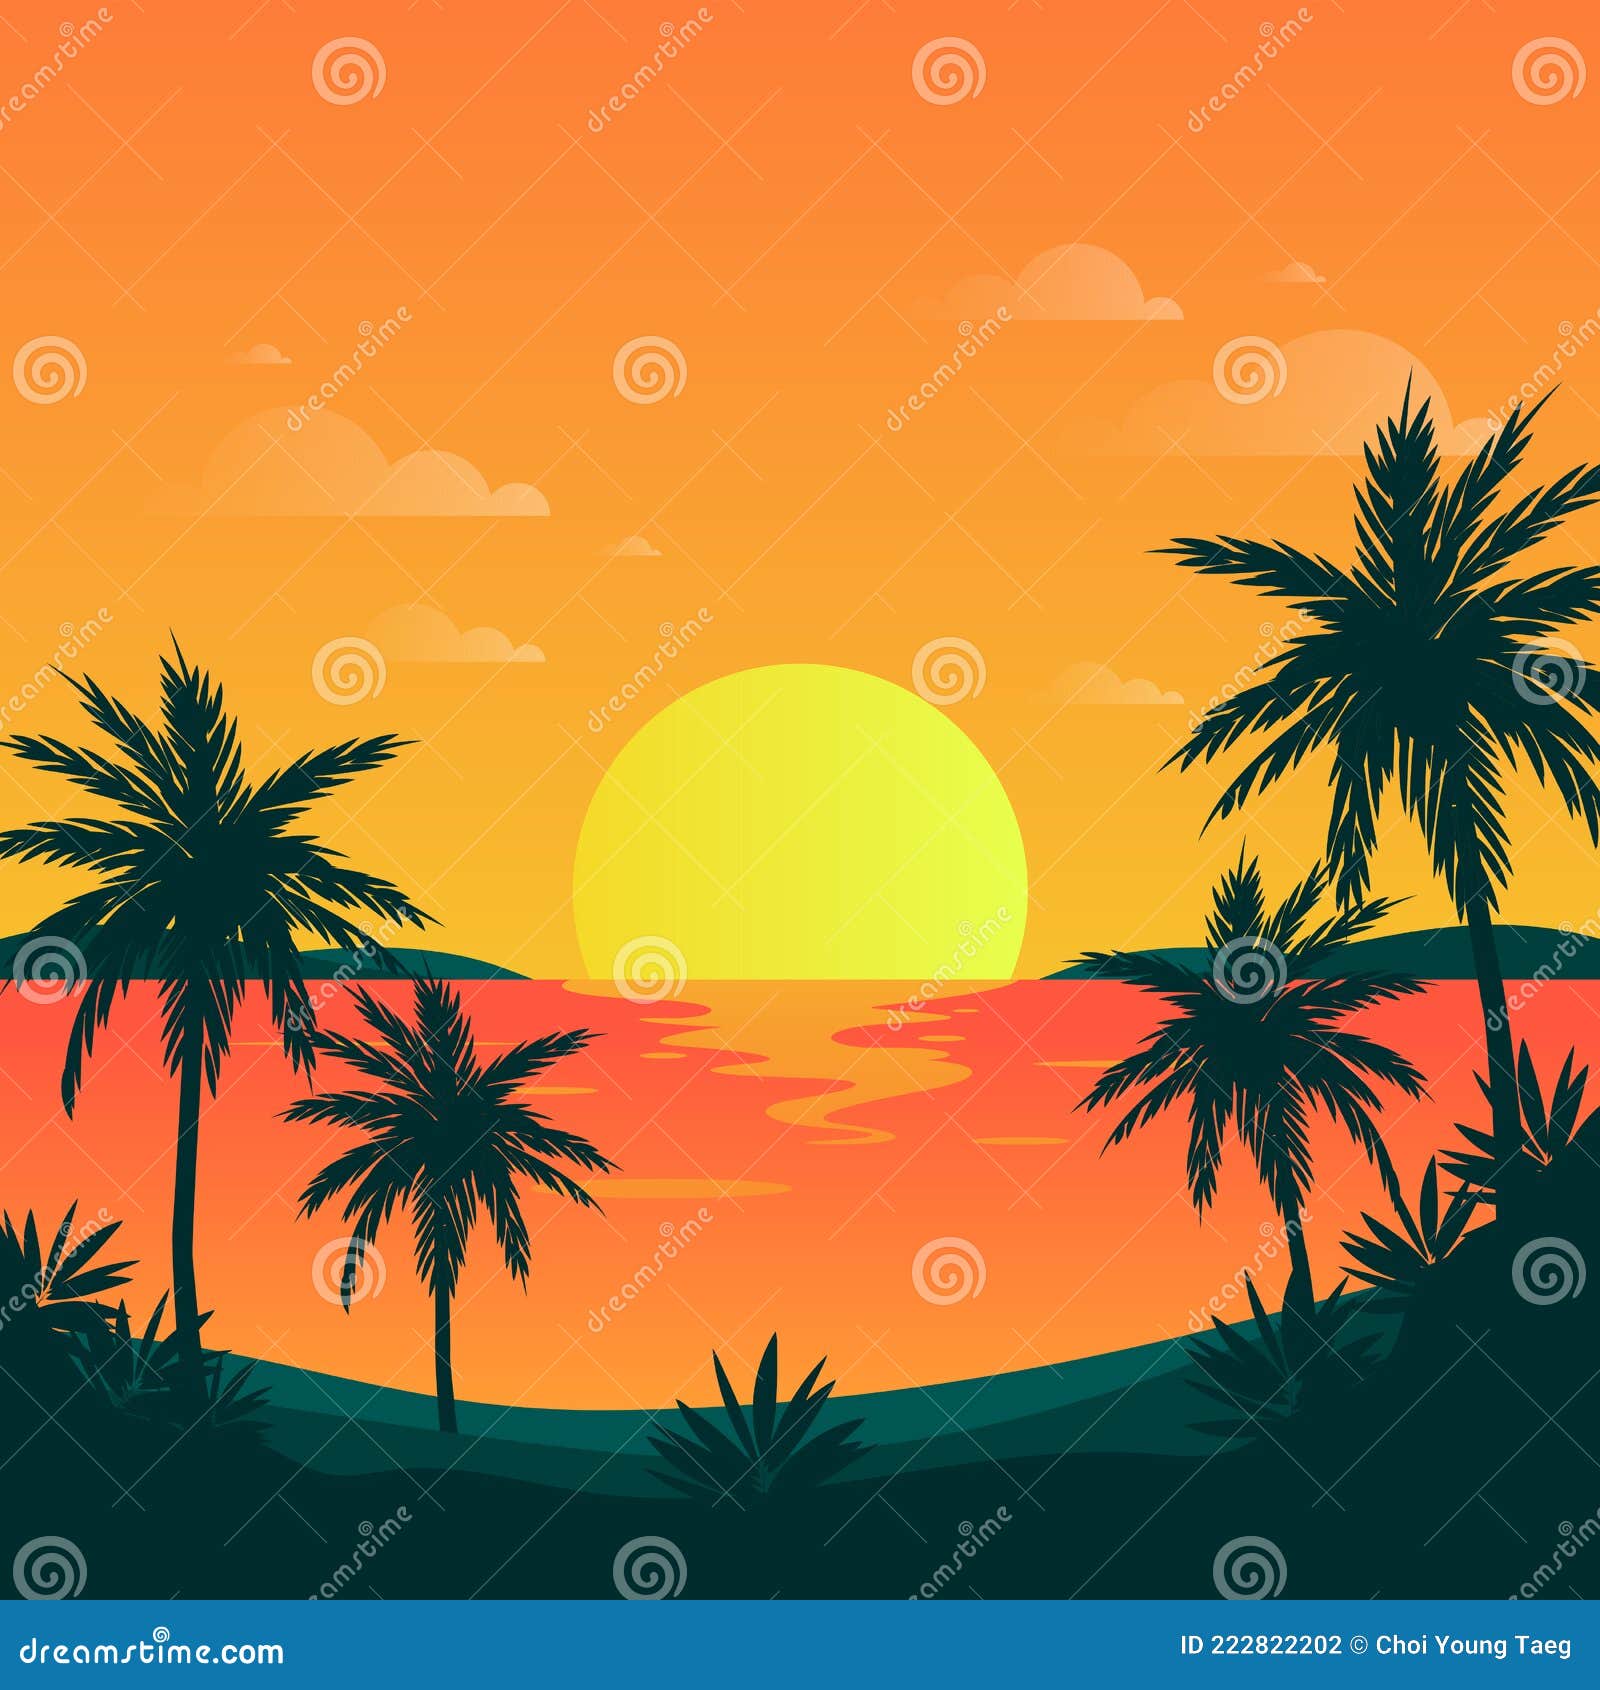 Palm Tree Ocean View Background Illust Stock Vector - Illustration of ...